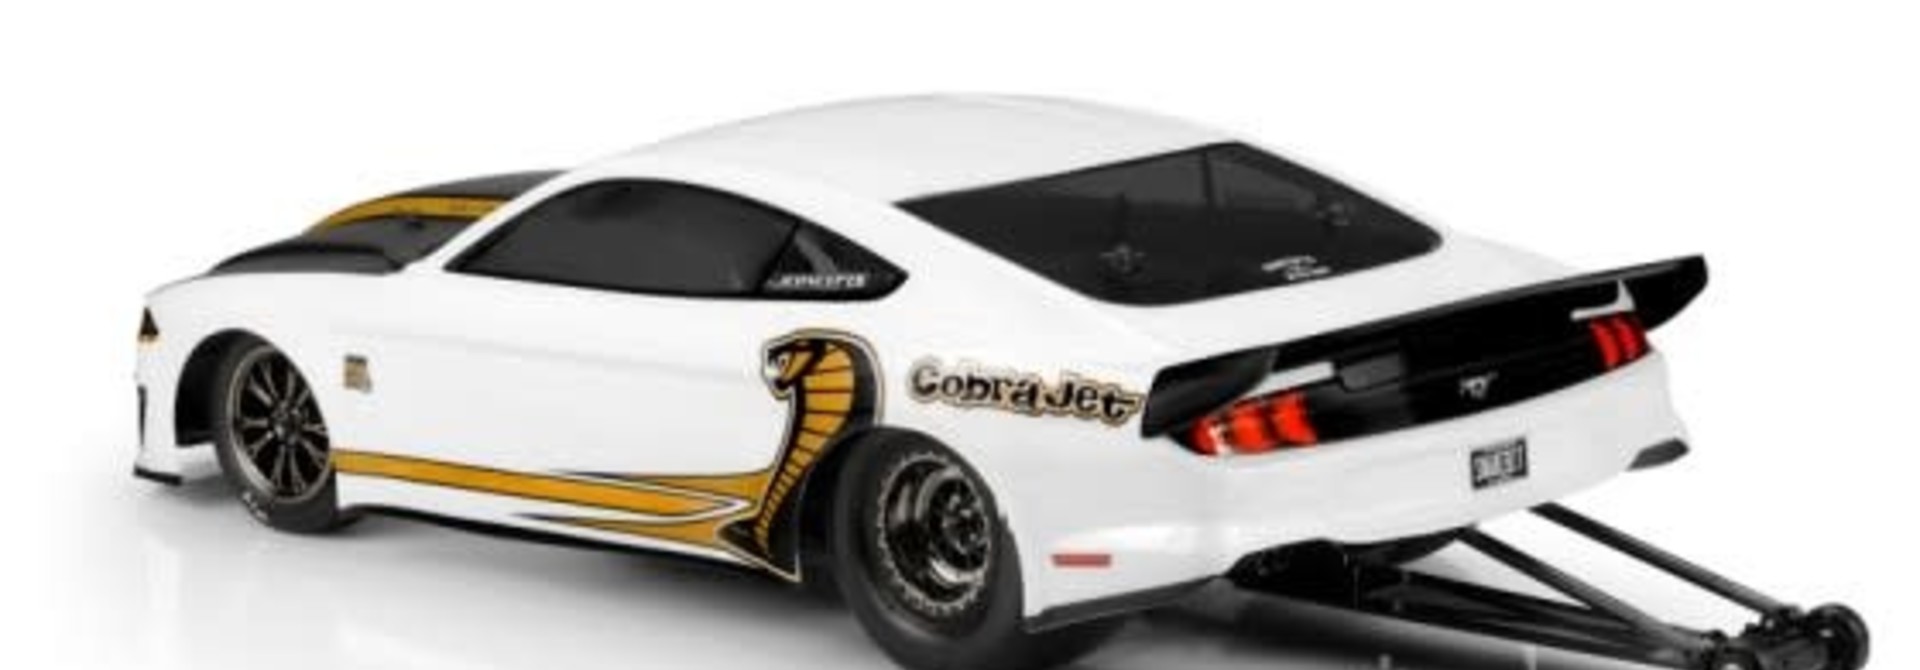 JConcepts 2018 Ford Mustang (Cobra Jet) (Fits ? DR10, 22S, Drag Slash - 11.00" width & 13" wheelbase) JCO0442